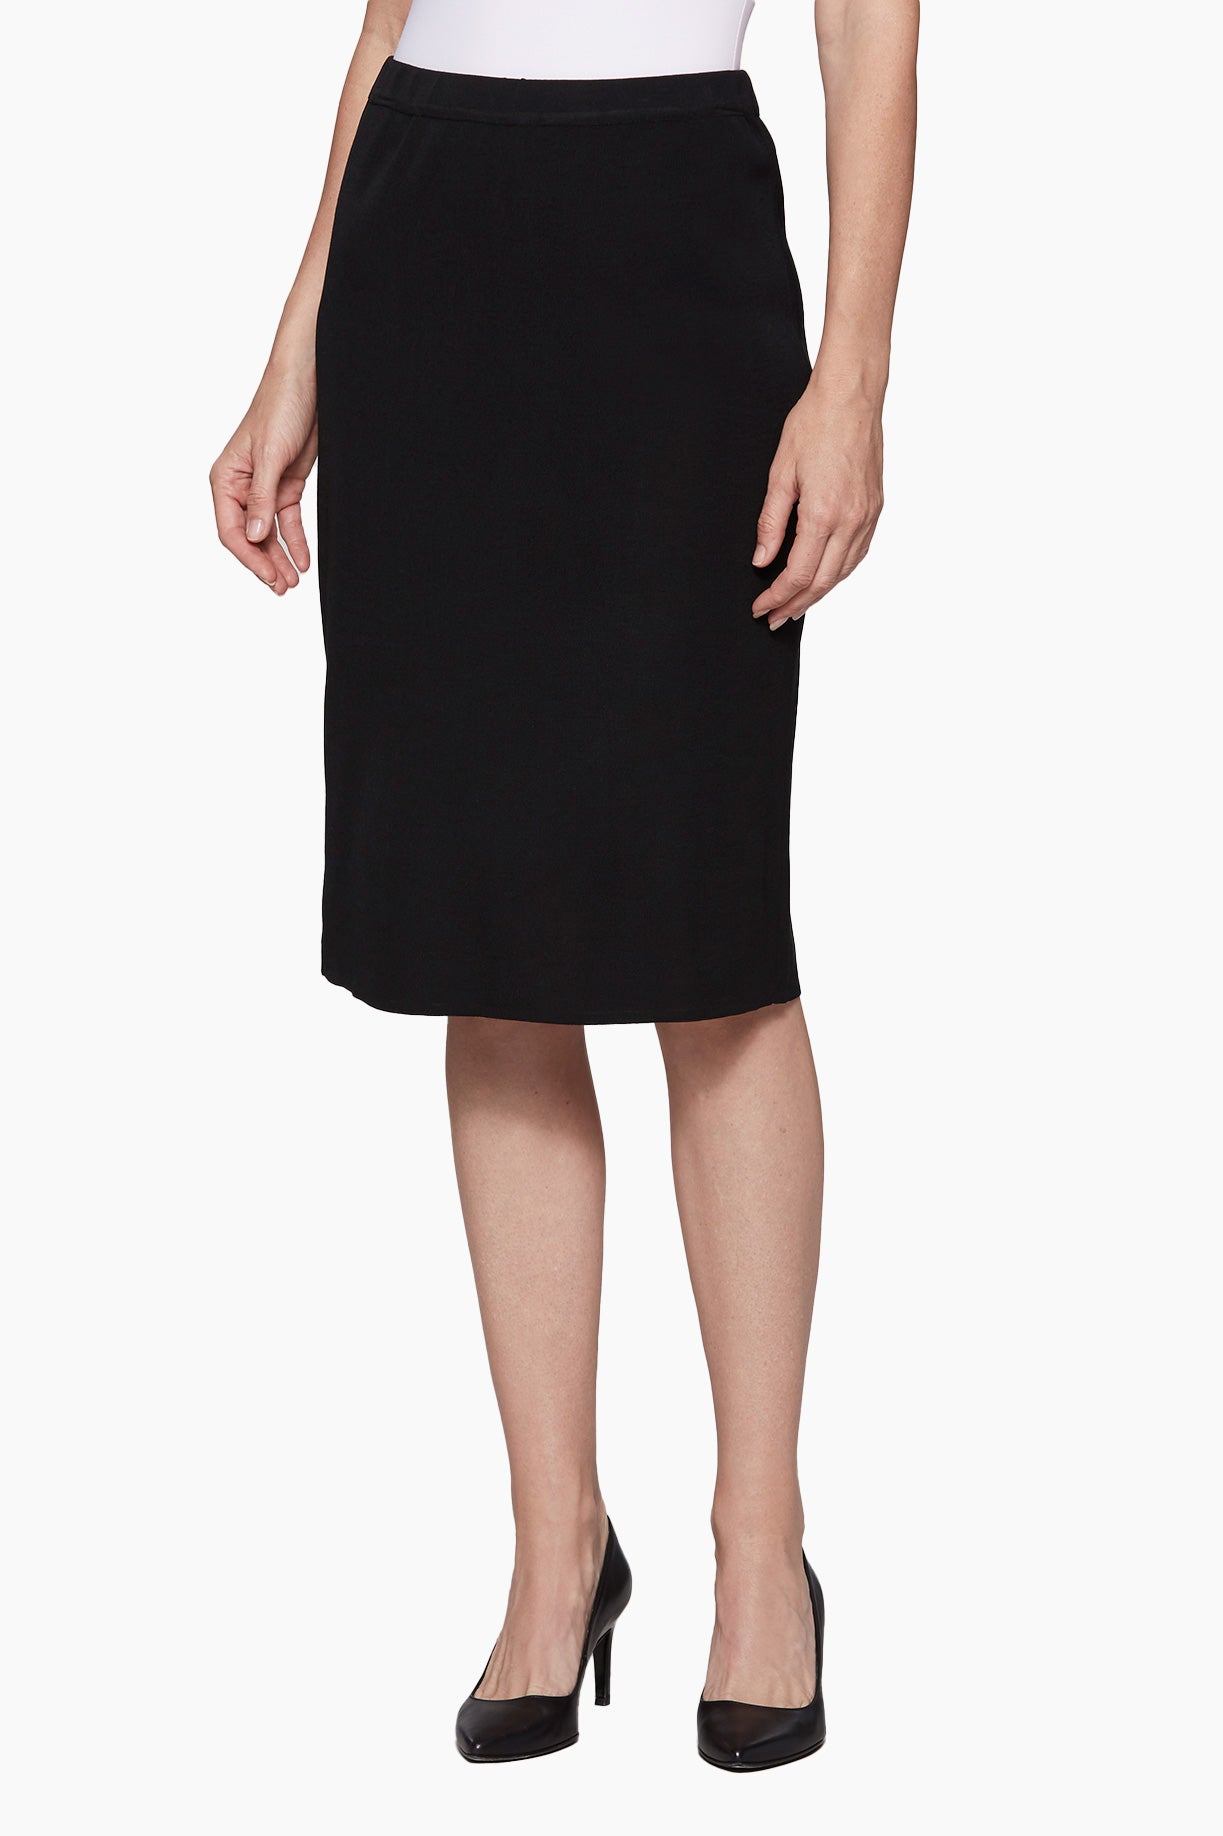 Black Pencil Skirt - Business Professional Skirt | Ming Wang Knits